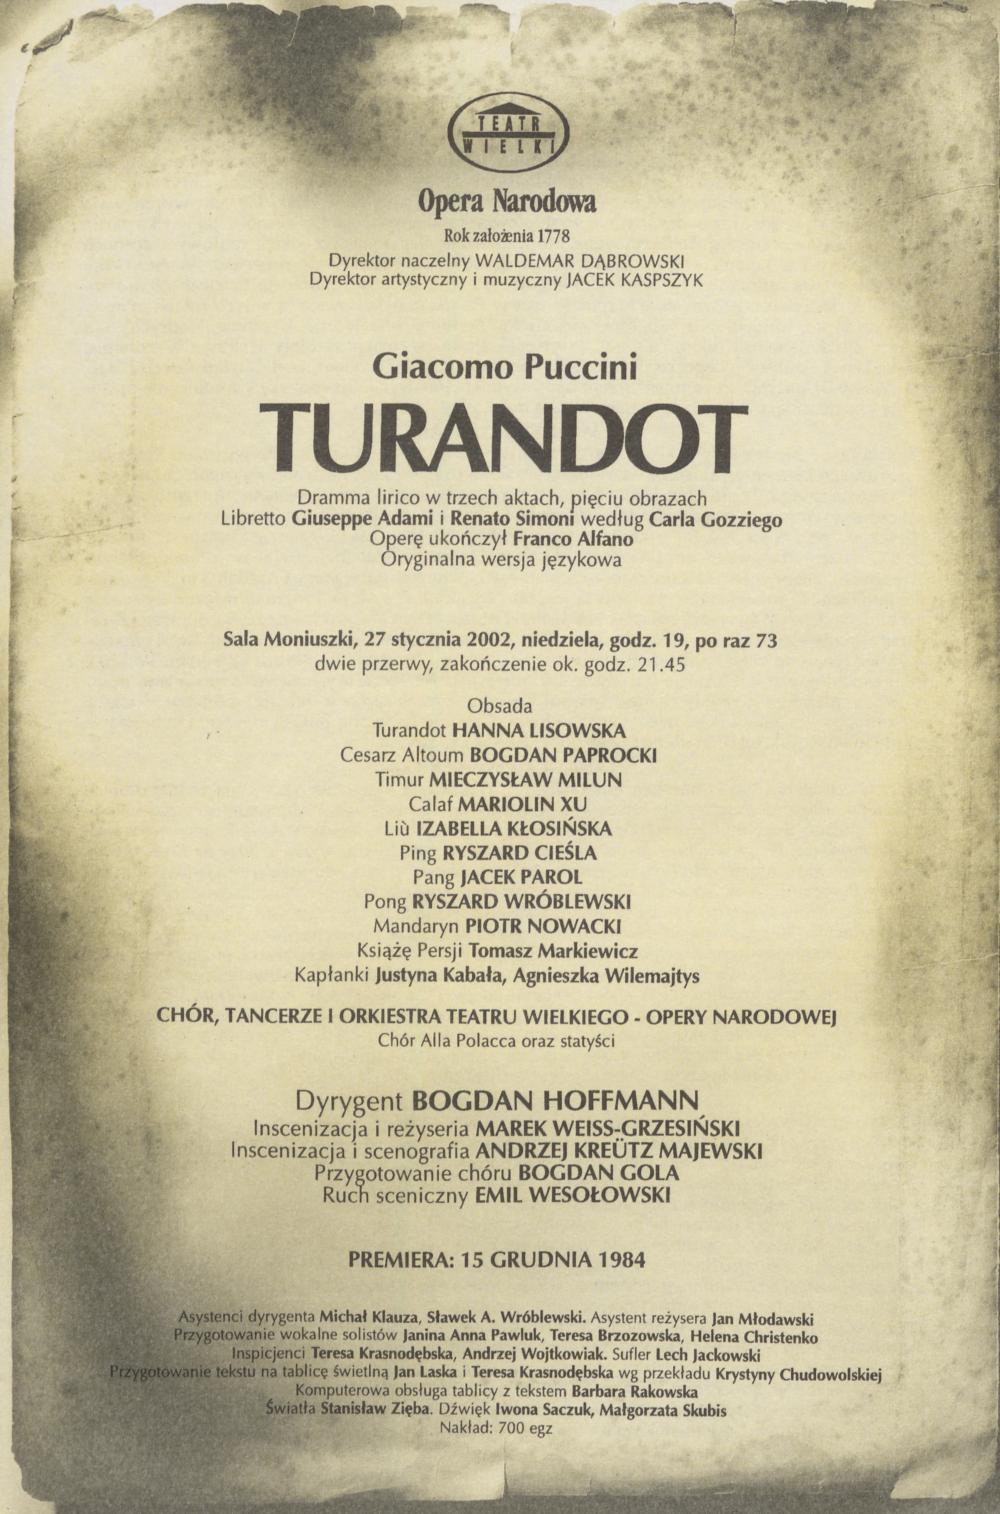 Wkładka obsadowa „Turandot” Giacomo Puccini 27-01-2002